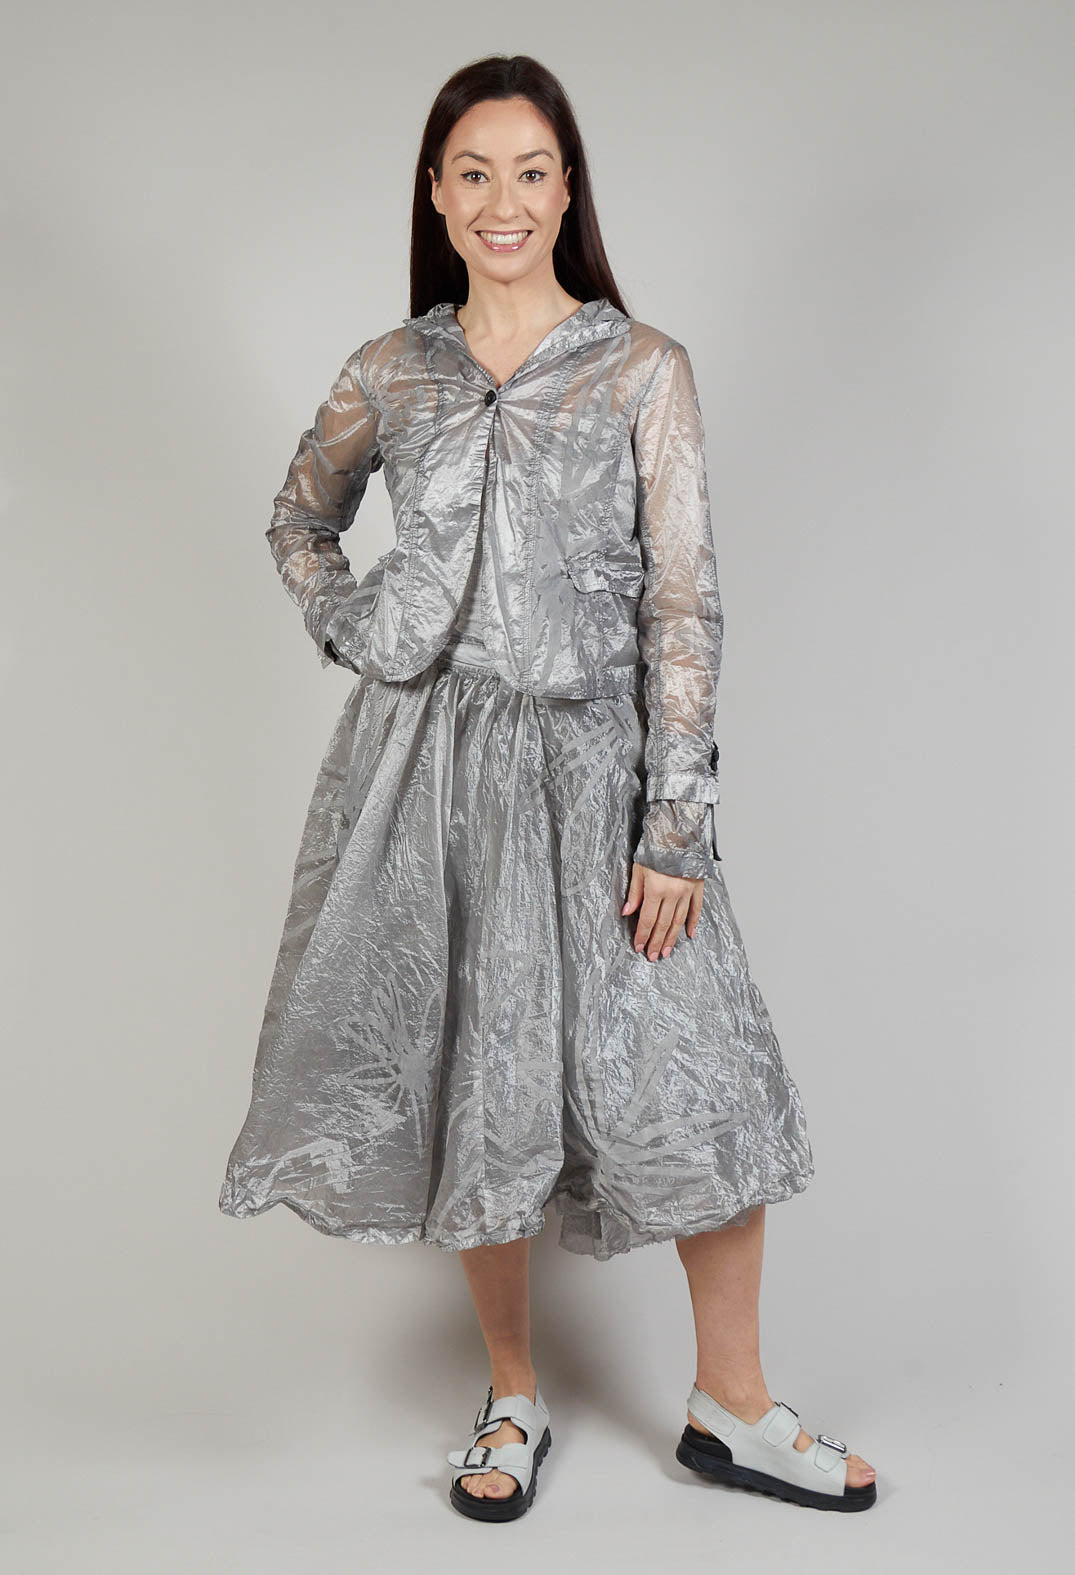 Flower Print Metallic Skirt in C.Coal 70% Cloud